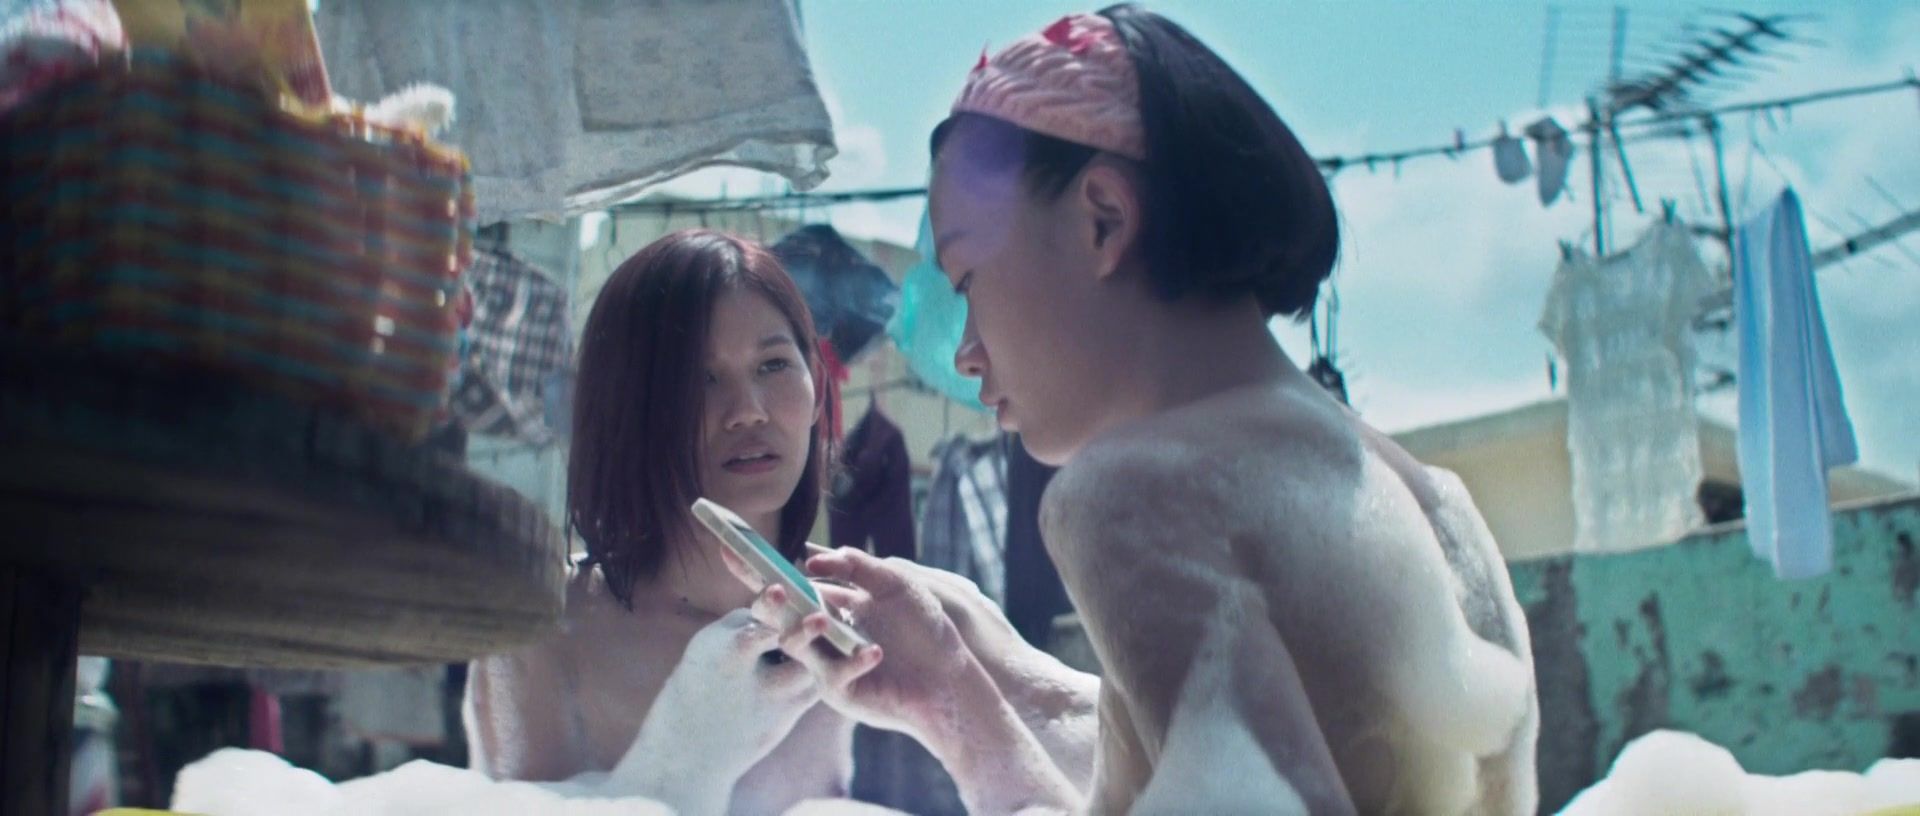 LesbianPornVideos Ashina Kwok, Koyi Mak, Fish Liew nude - Tung baan tung hok (2015) Tori Black